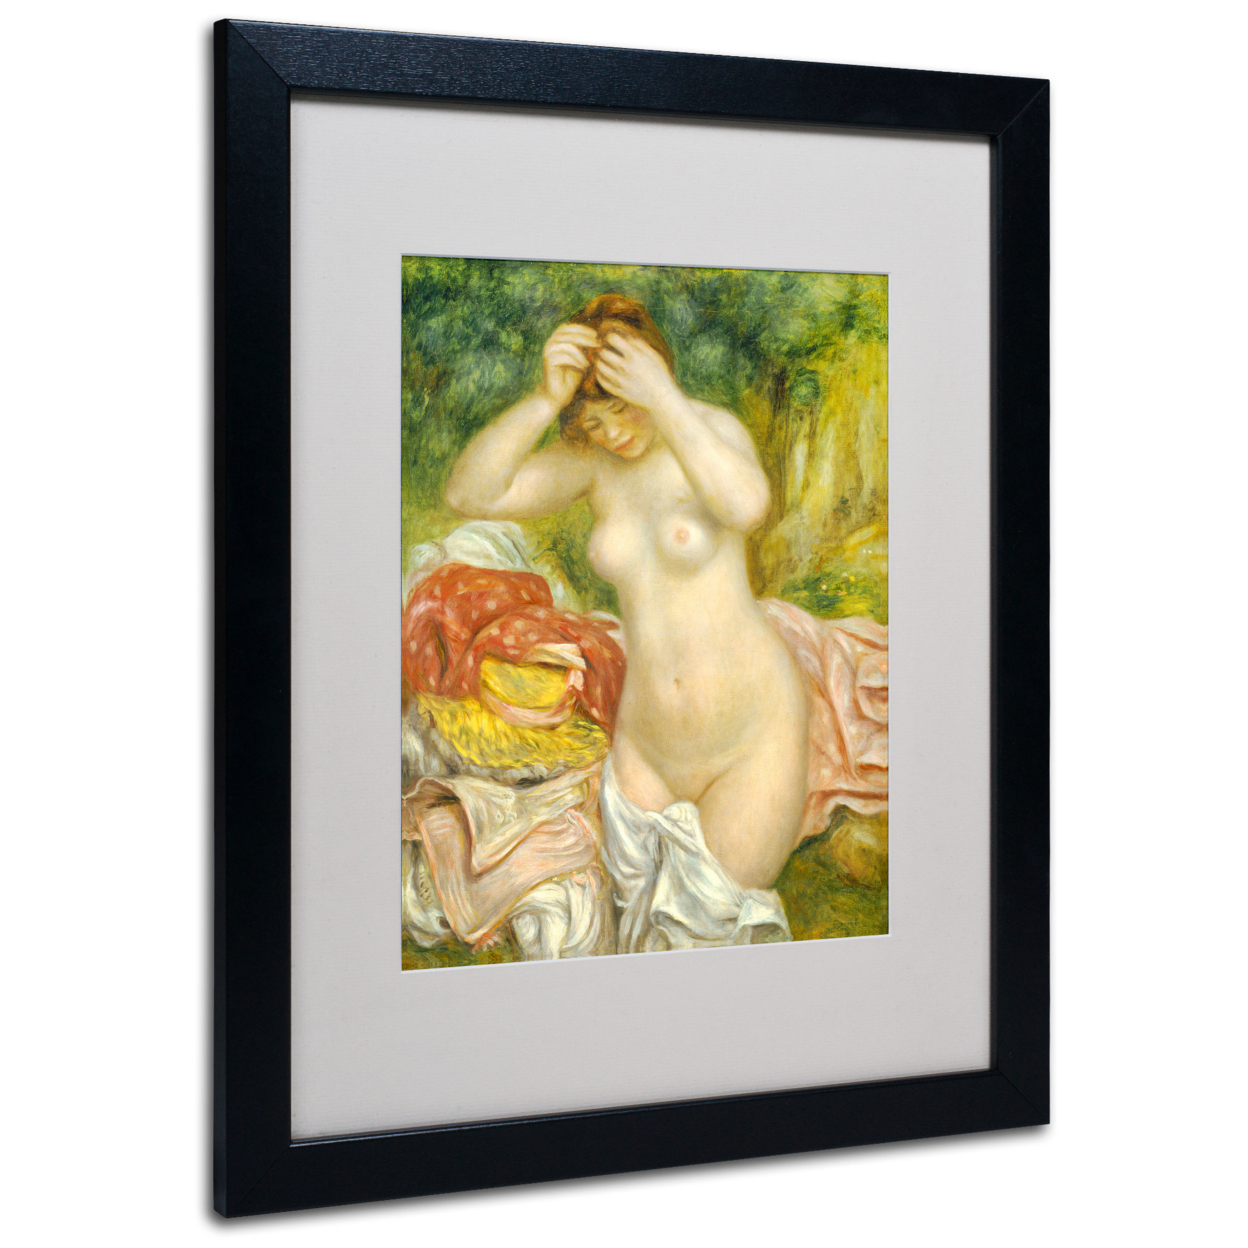 Pierre Renoir 'Bather Arranging Her Hair' Black Wooden Framed Art 18 X 22 Inches